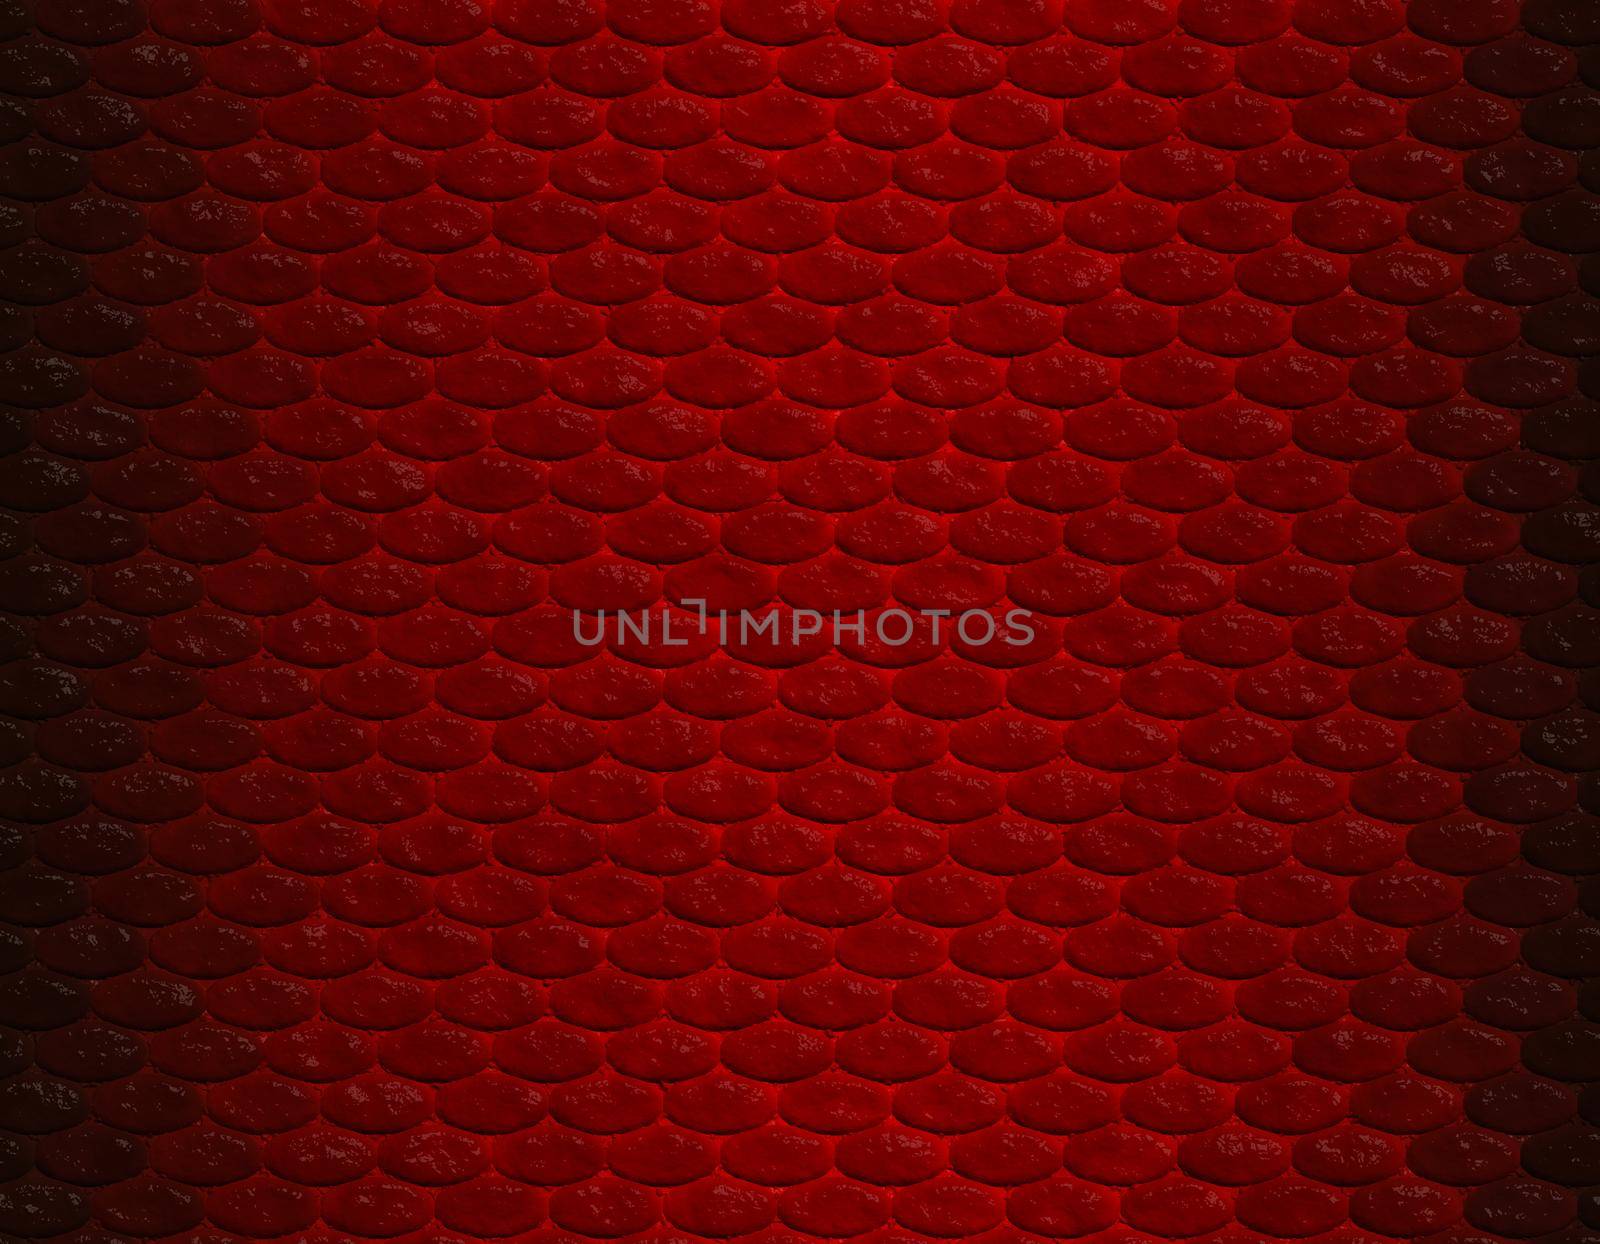 Deep red gradient snake skin pattern, oval scale by Bezdnatm